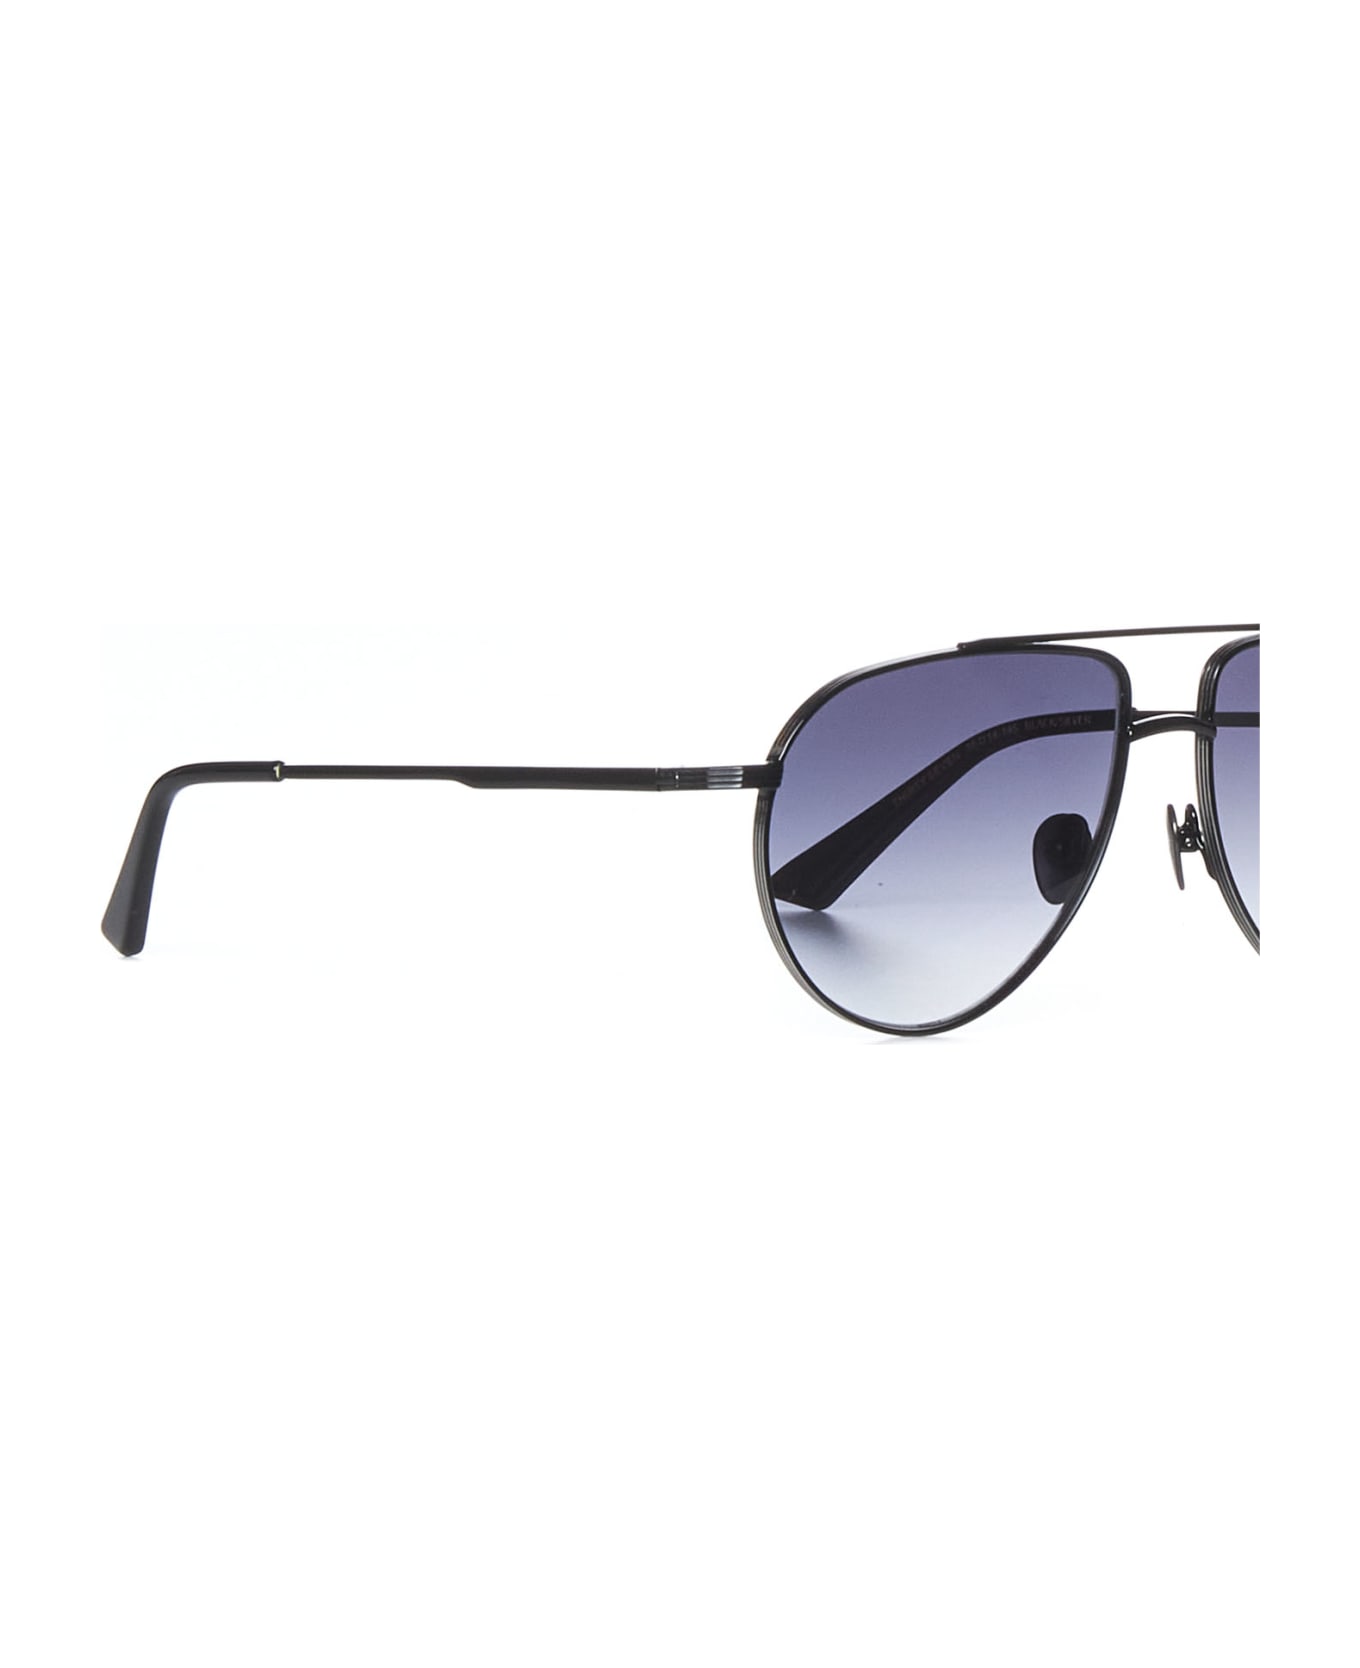 g.o.d Sunglasses - Black silver grey